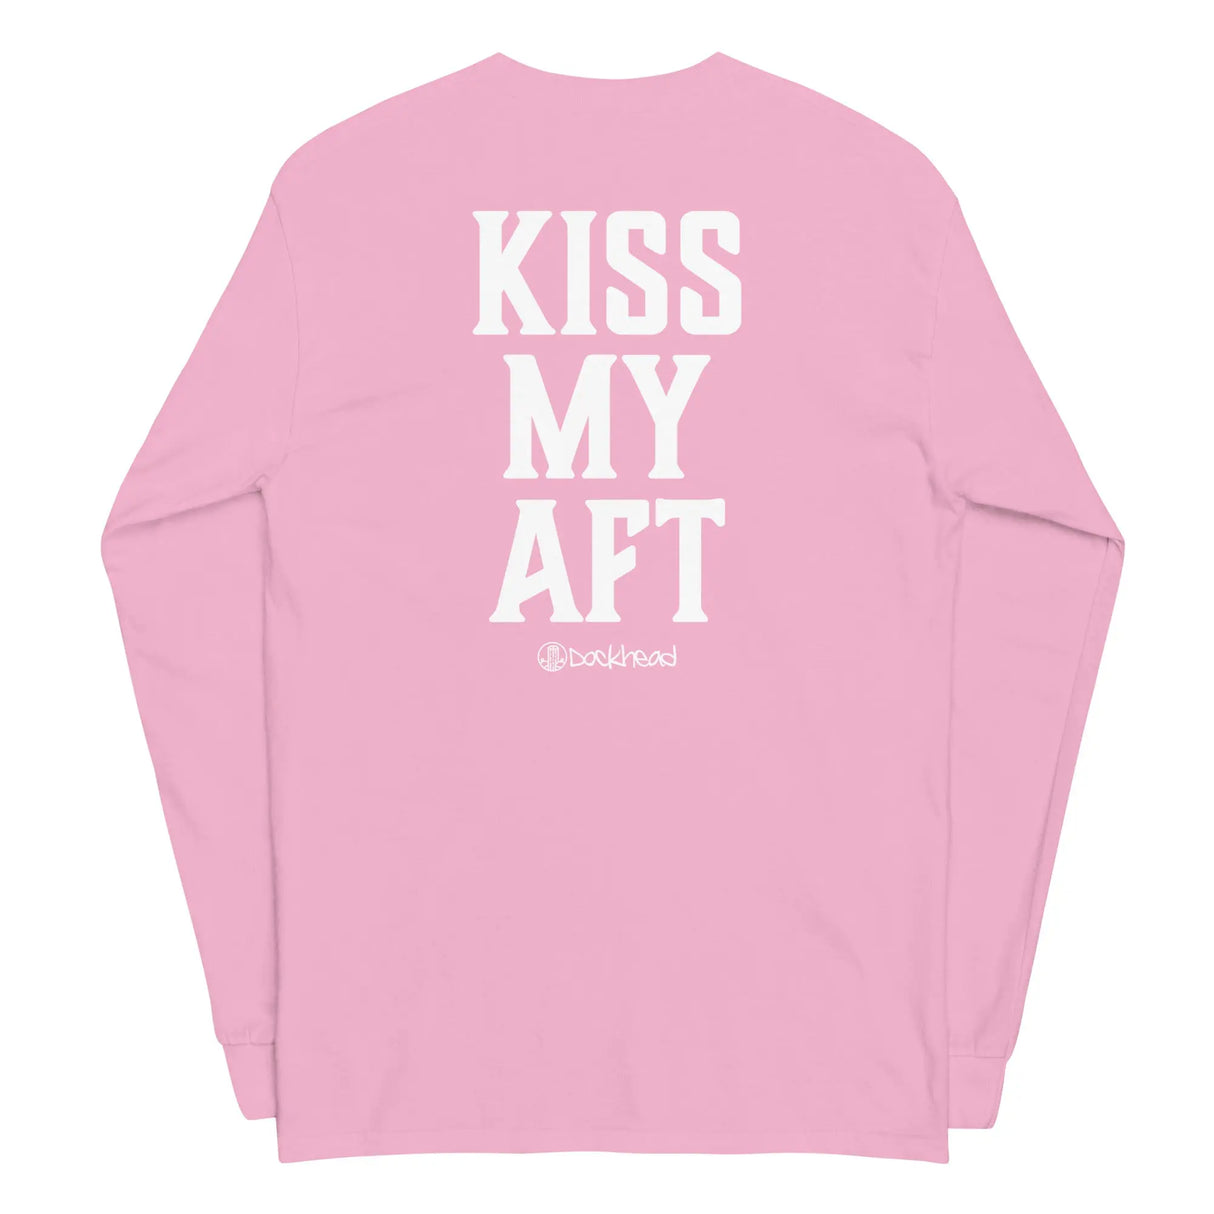 Kiss My Aft Long Sleeve Shirt - Dockhead